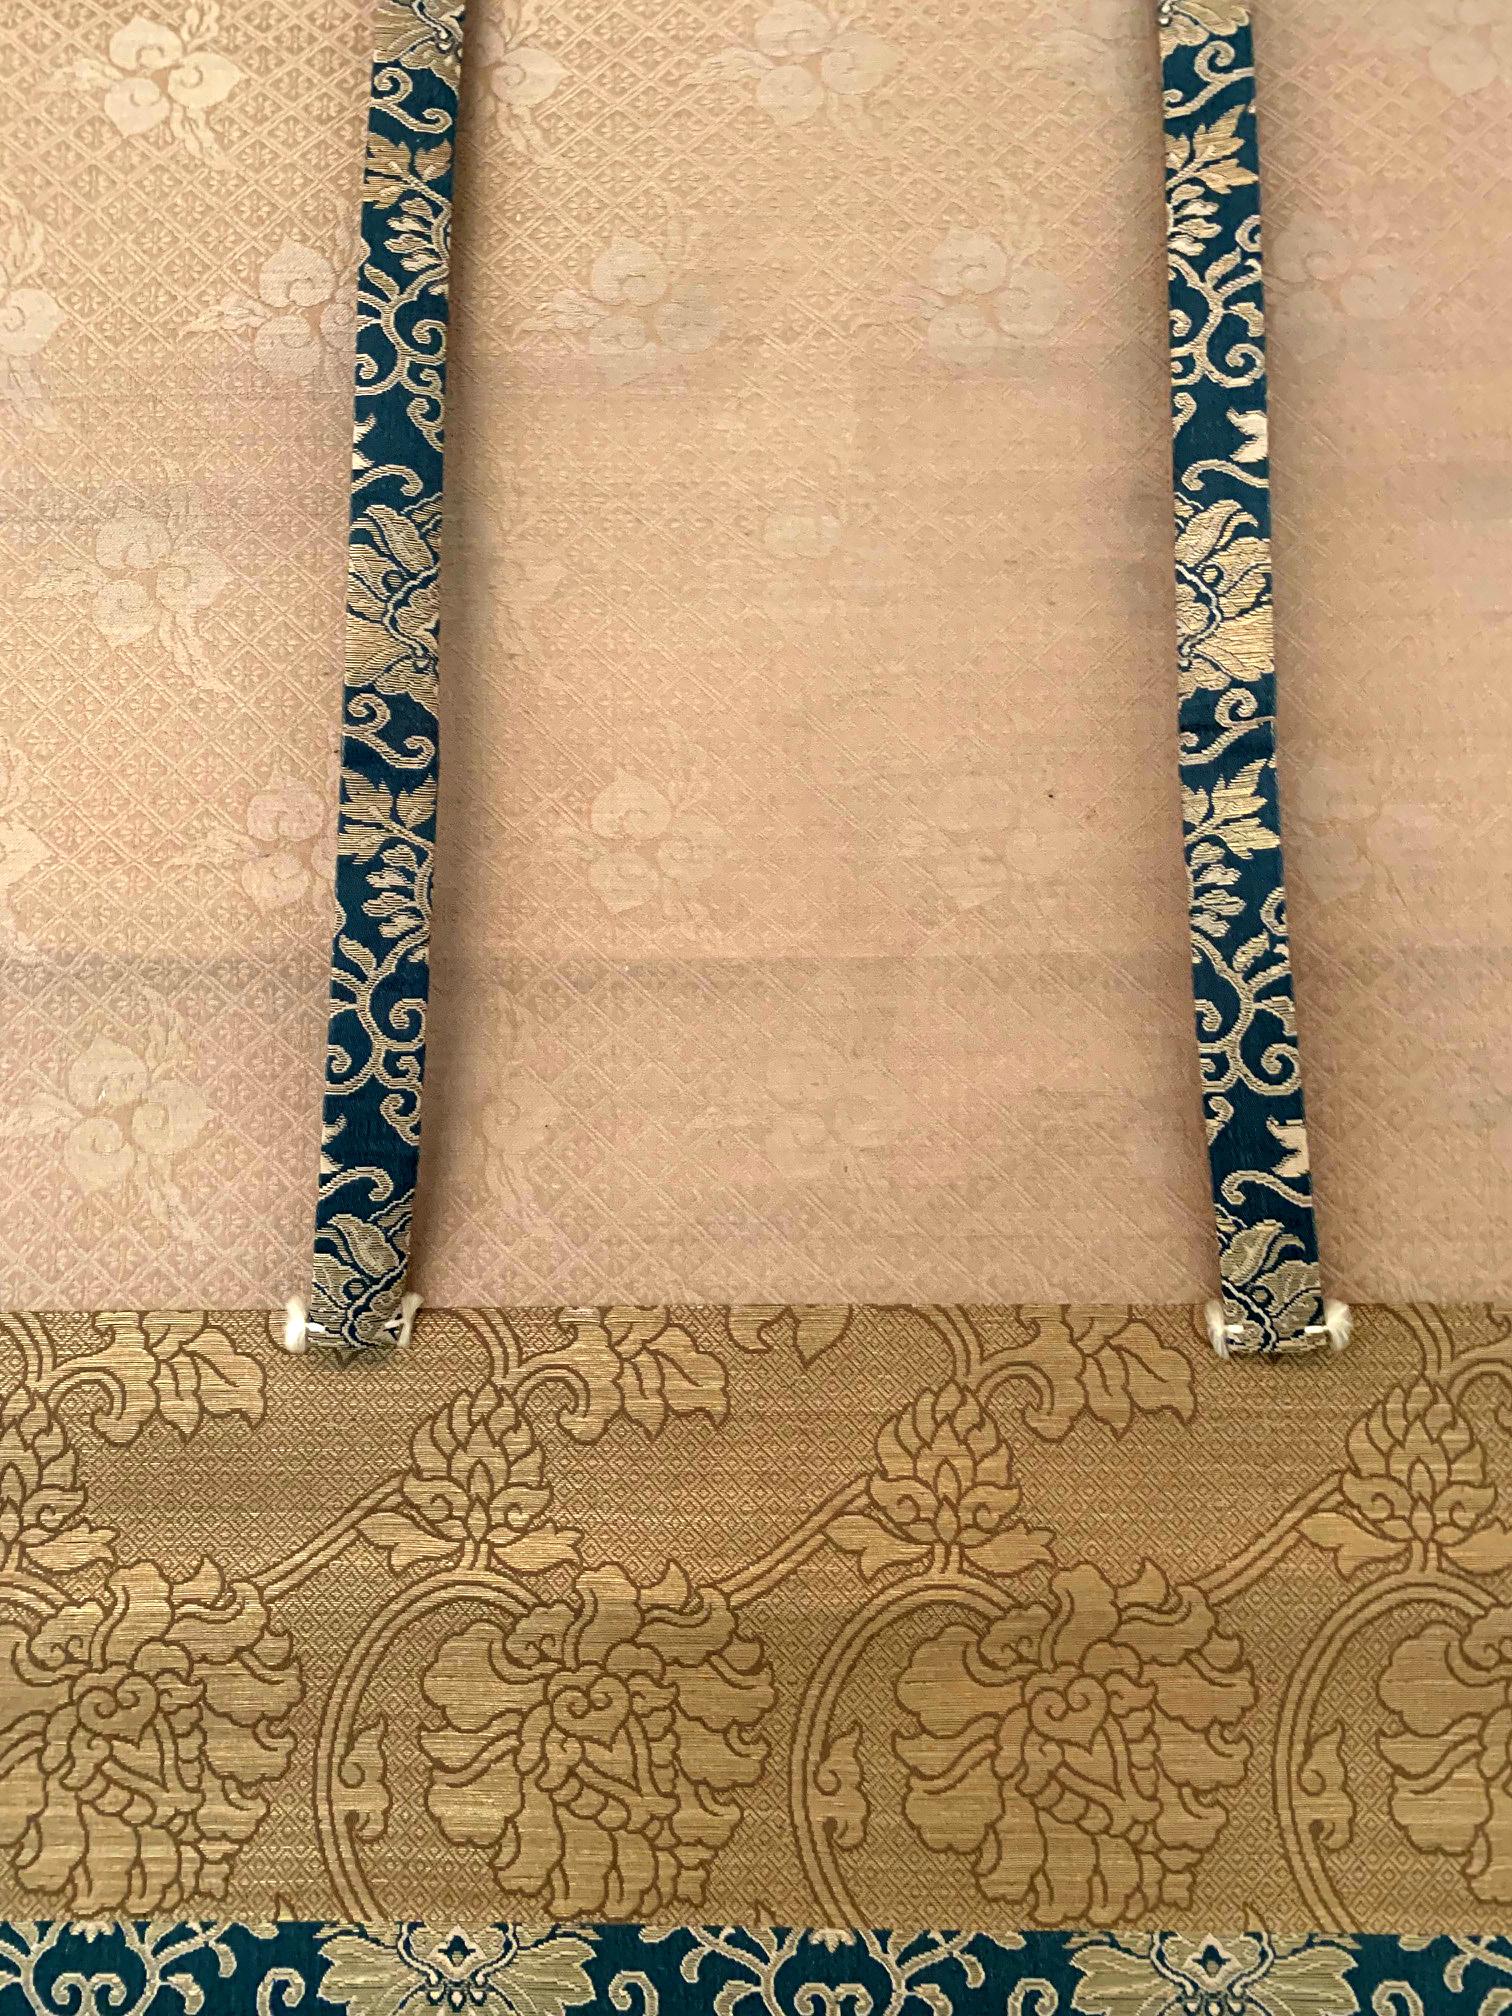 bamboo scroll wall hanging